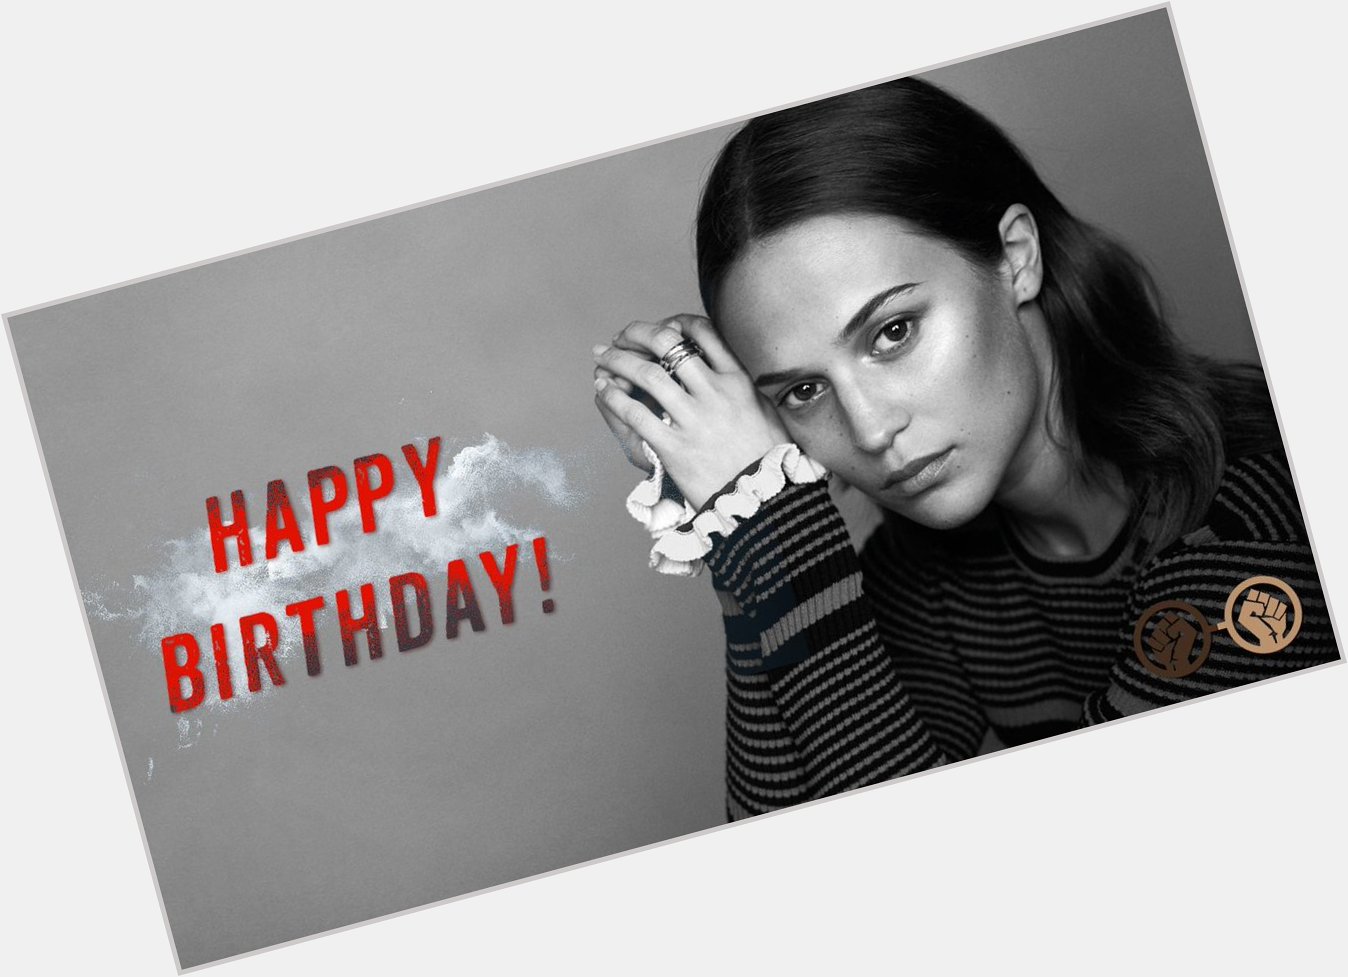 Happy birthday, Alicia Vikander! We hope the fierce Tomb Raider has a great day! 